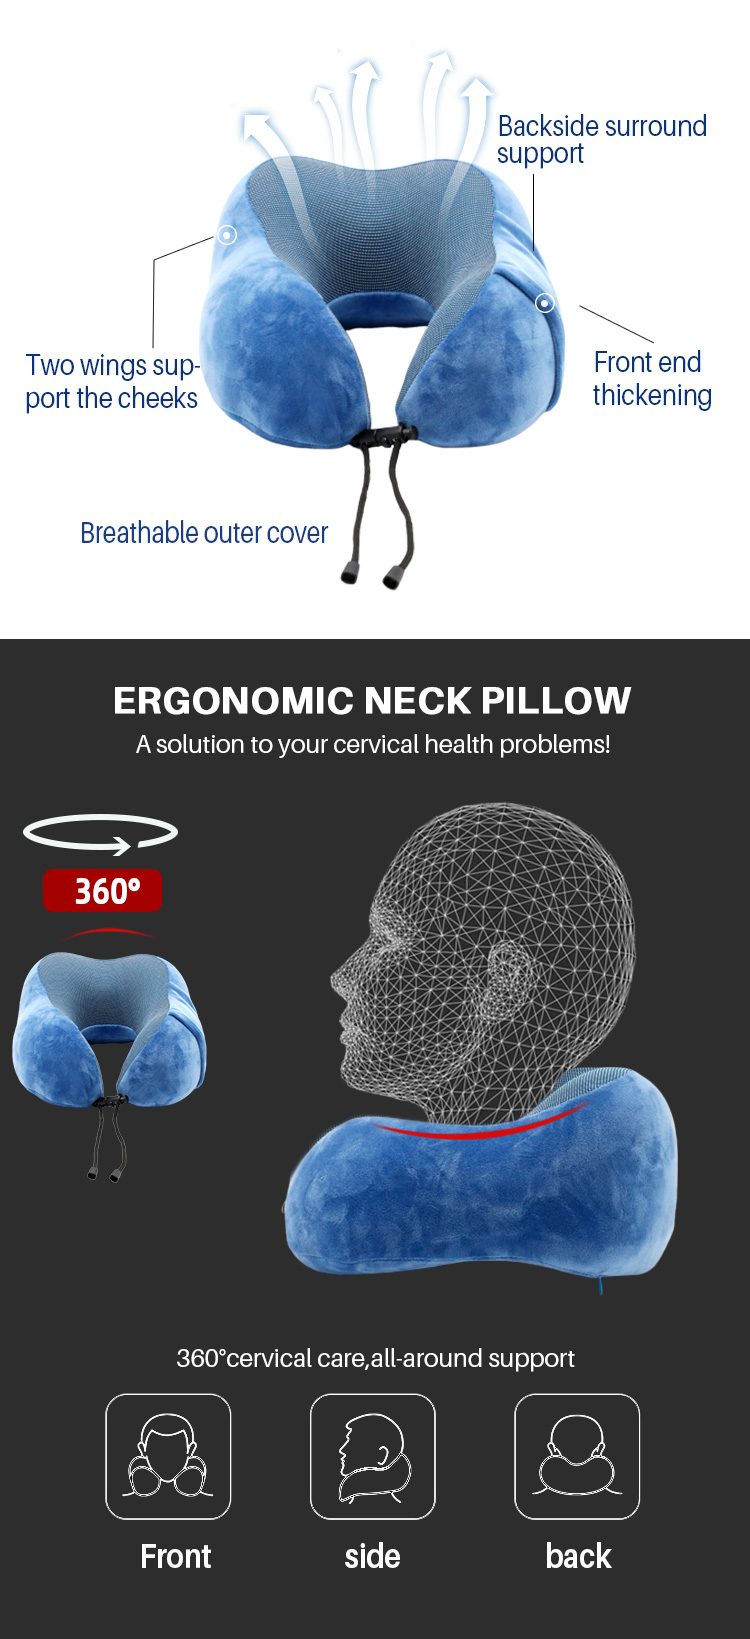 3D Stereoscopic neck pillow